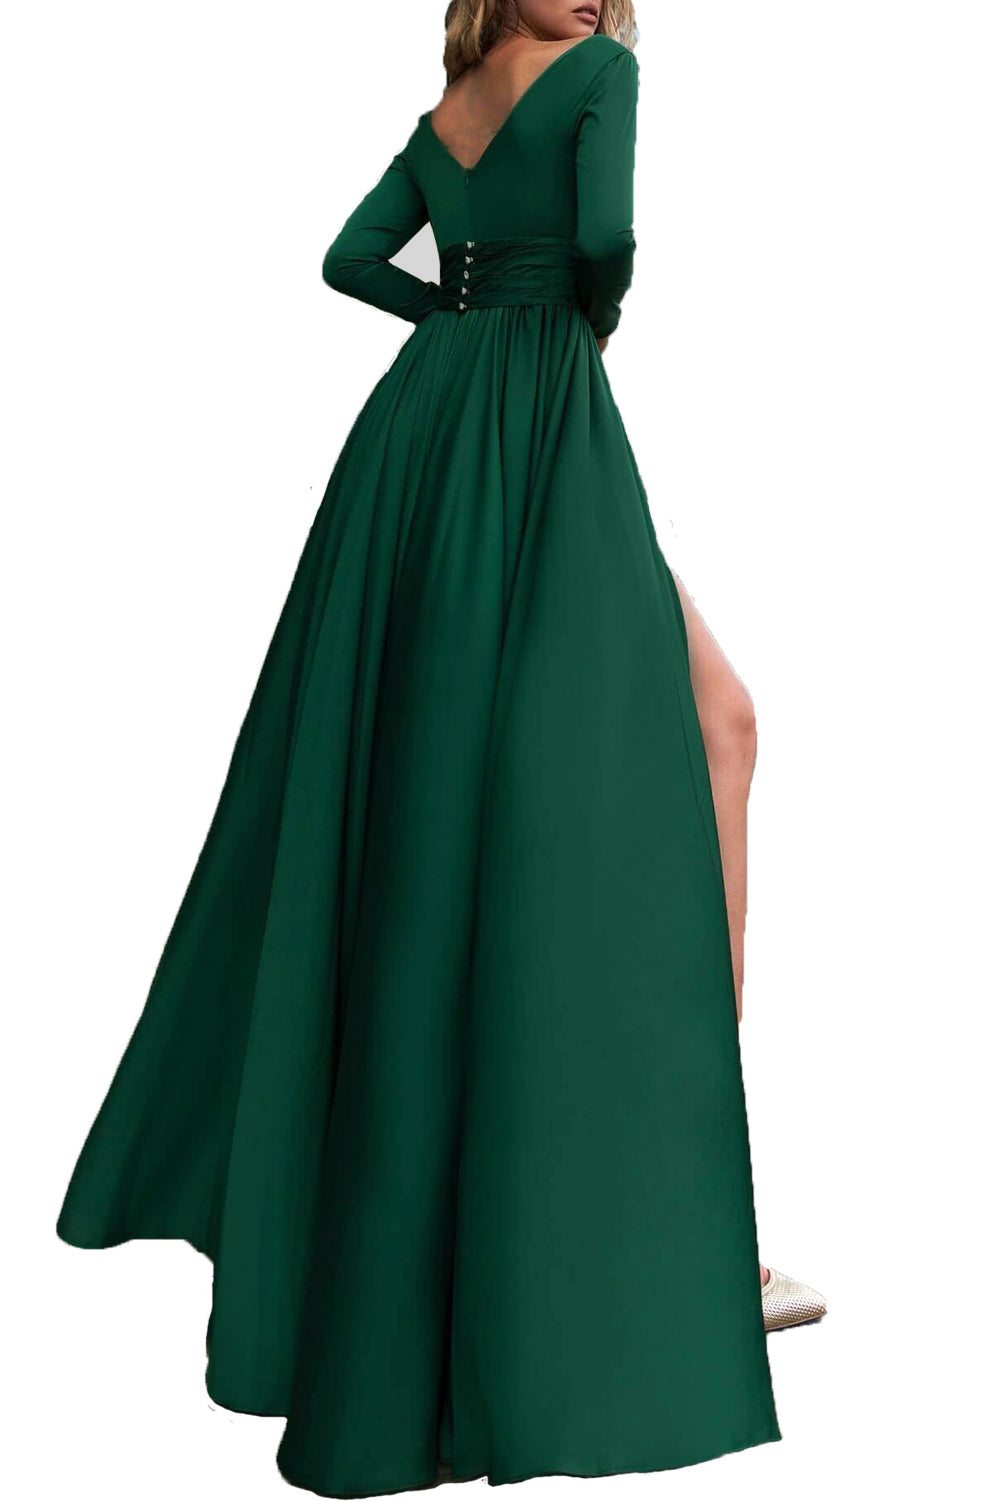 Elegant V Neck Dark Green Flowing Long Prom Dresses With Sleeves Pl214 Siaoryne 0138